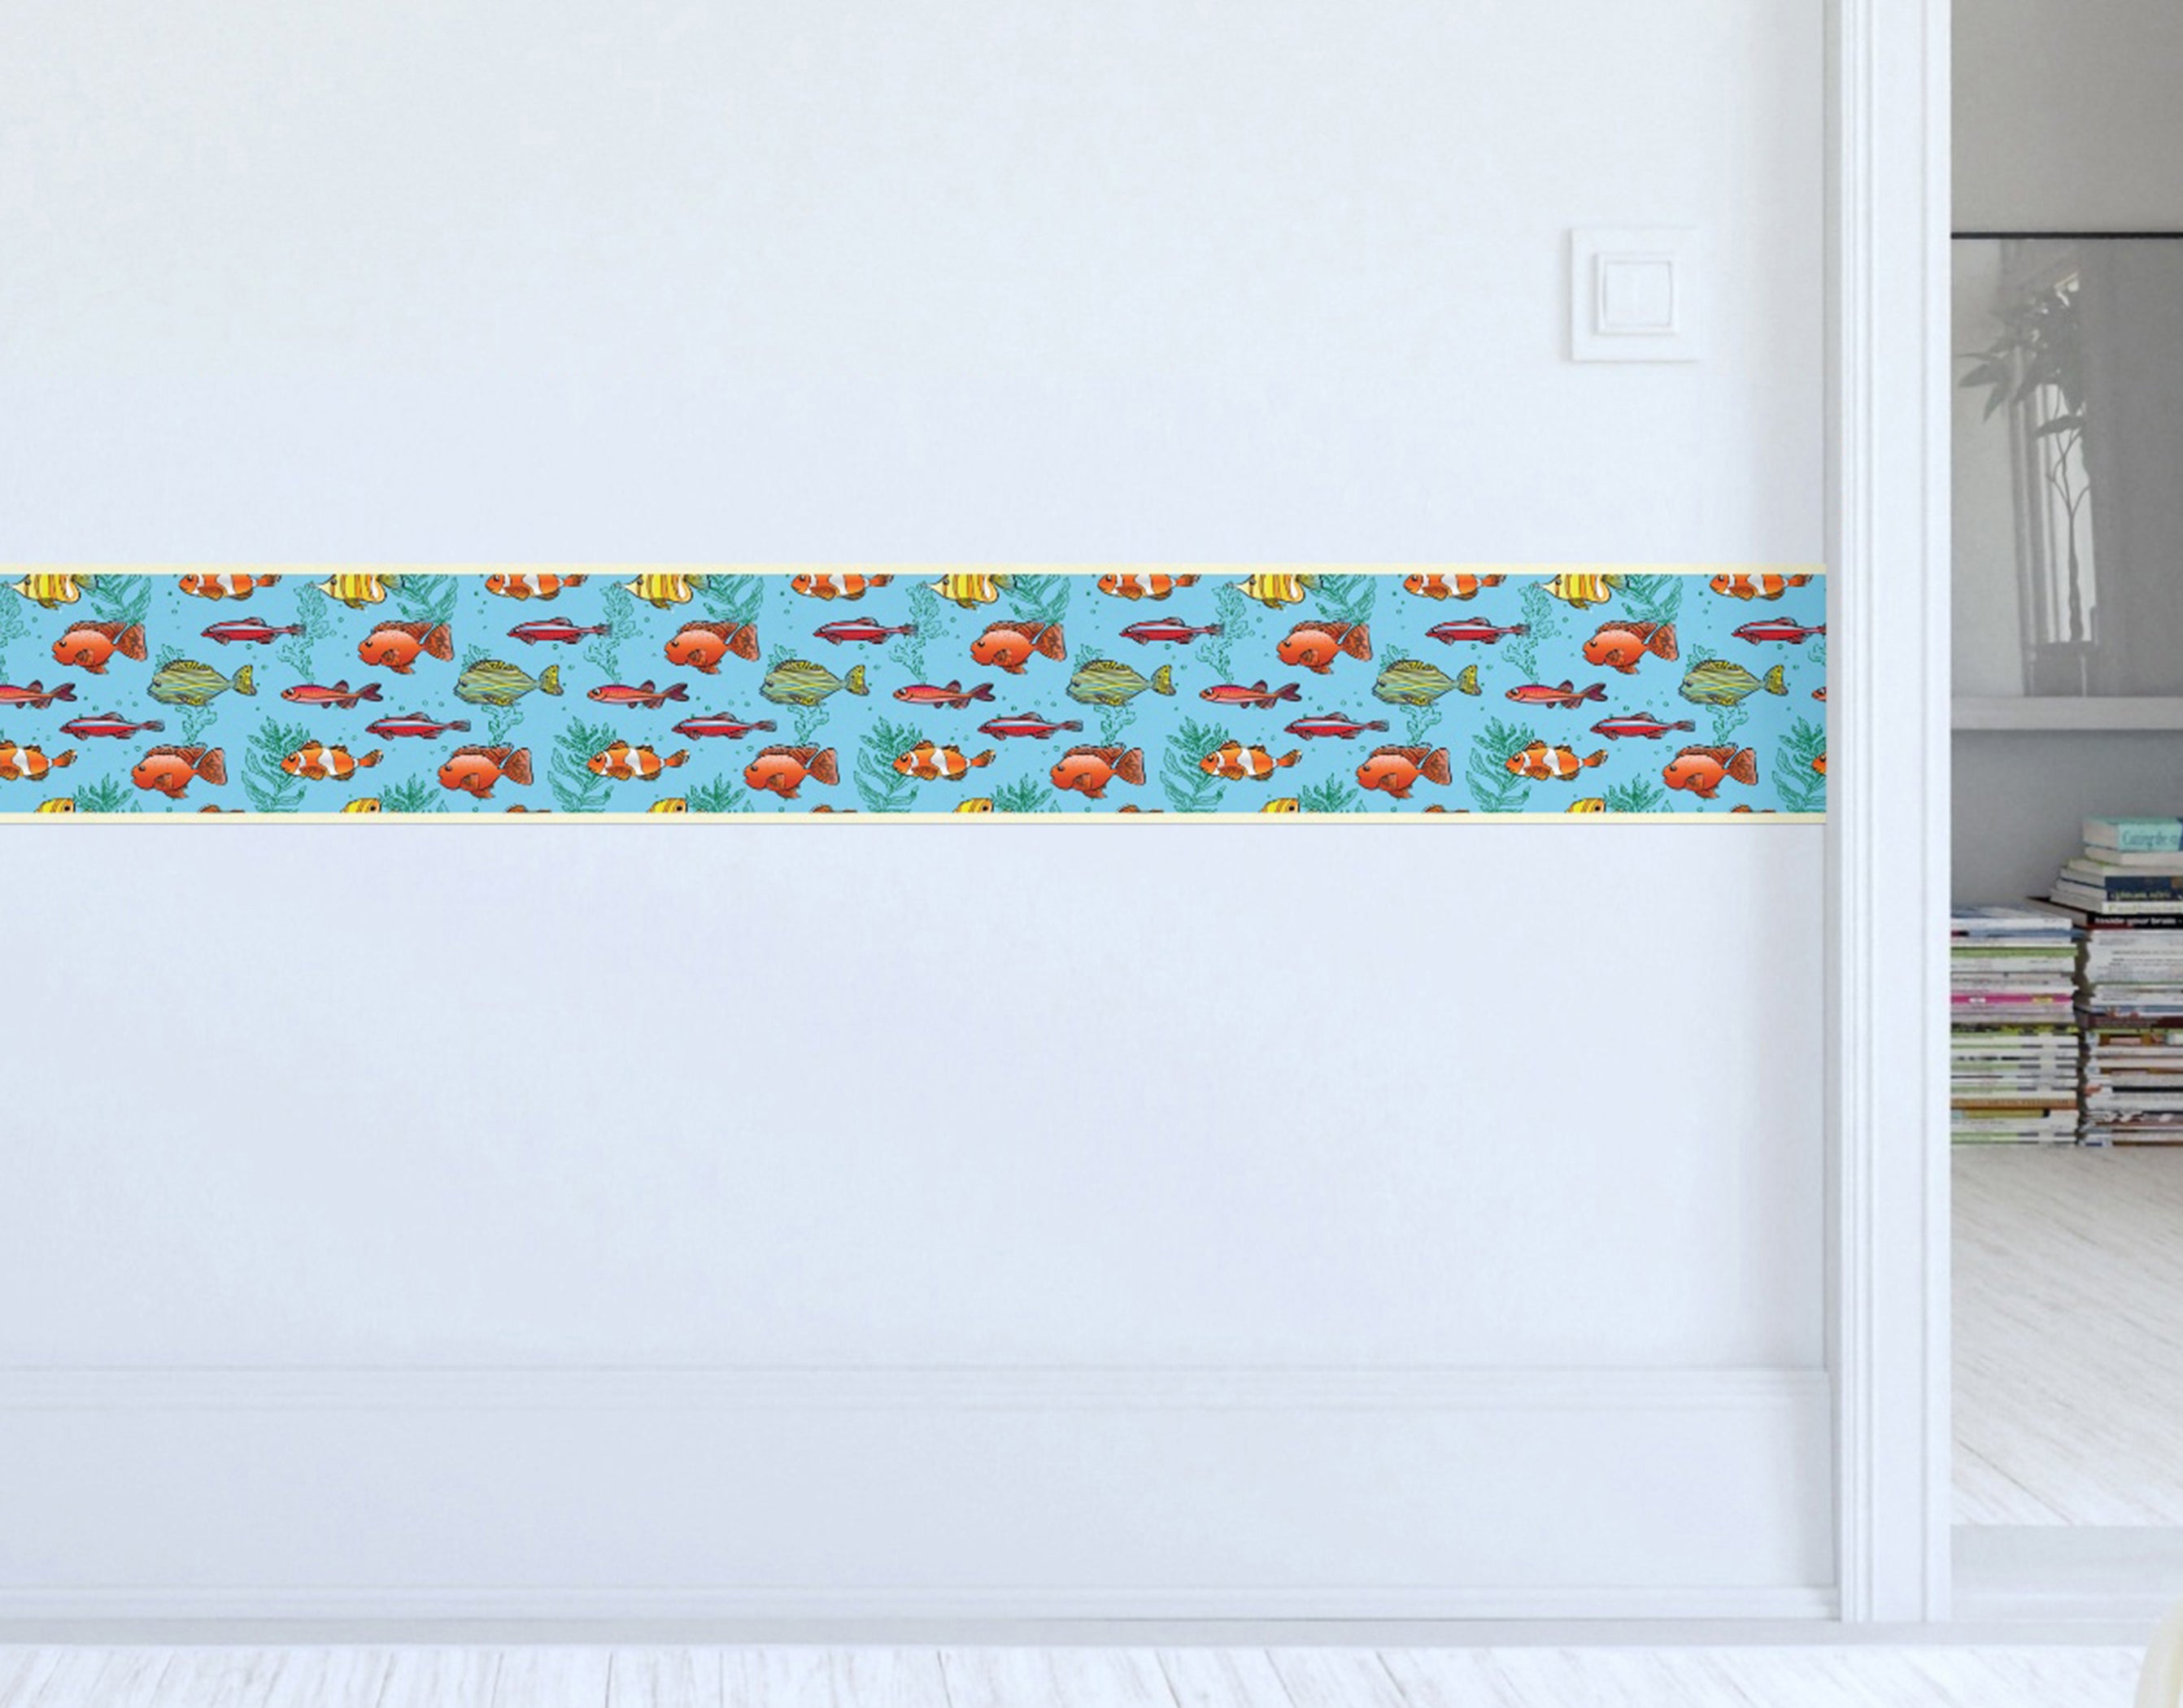 GB90061 Cartoon Fish Peel and Stick Wallpaper Border 10in Height x 18ft Long Blue/Green/Orange